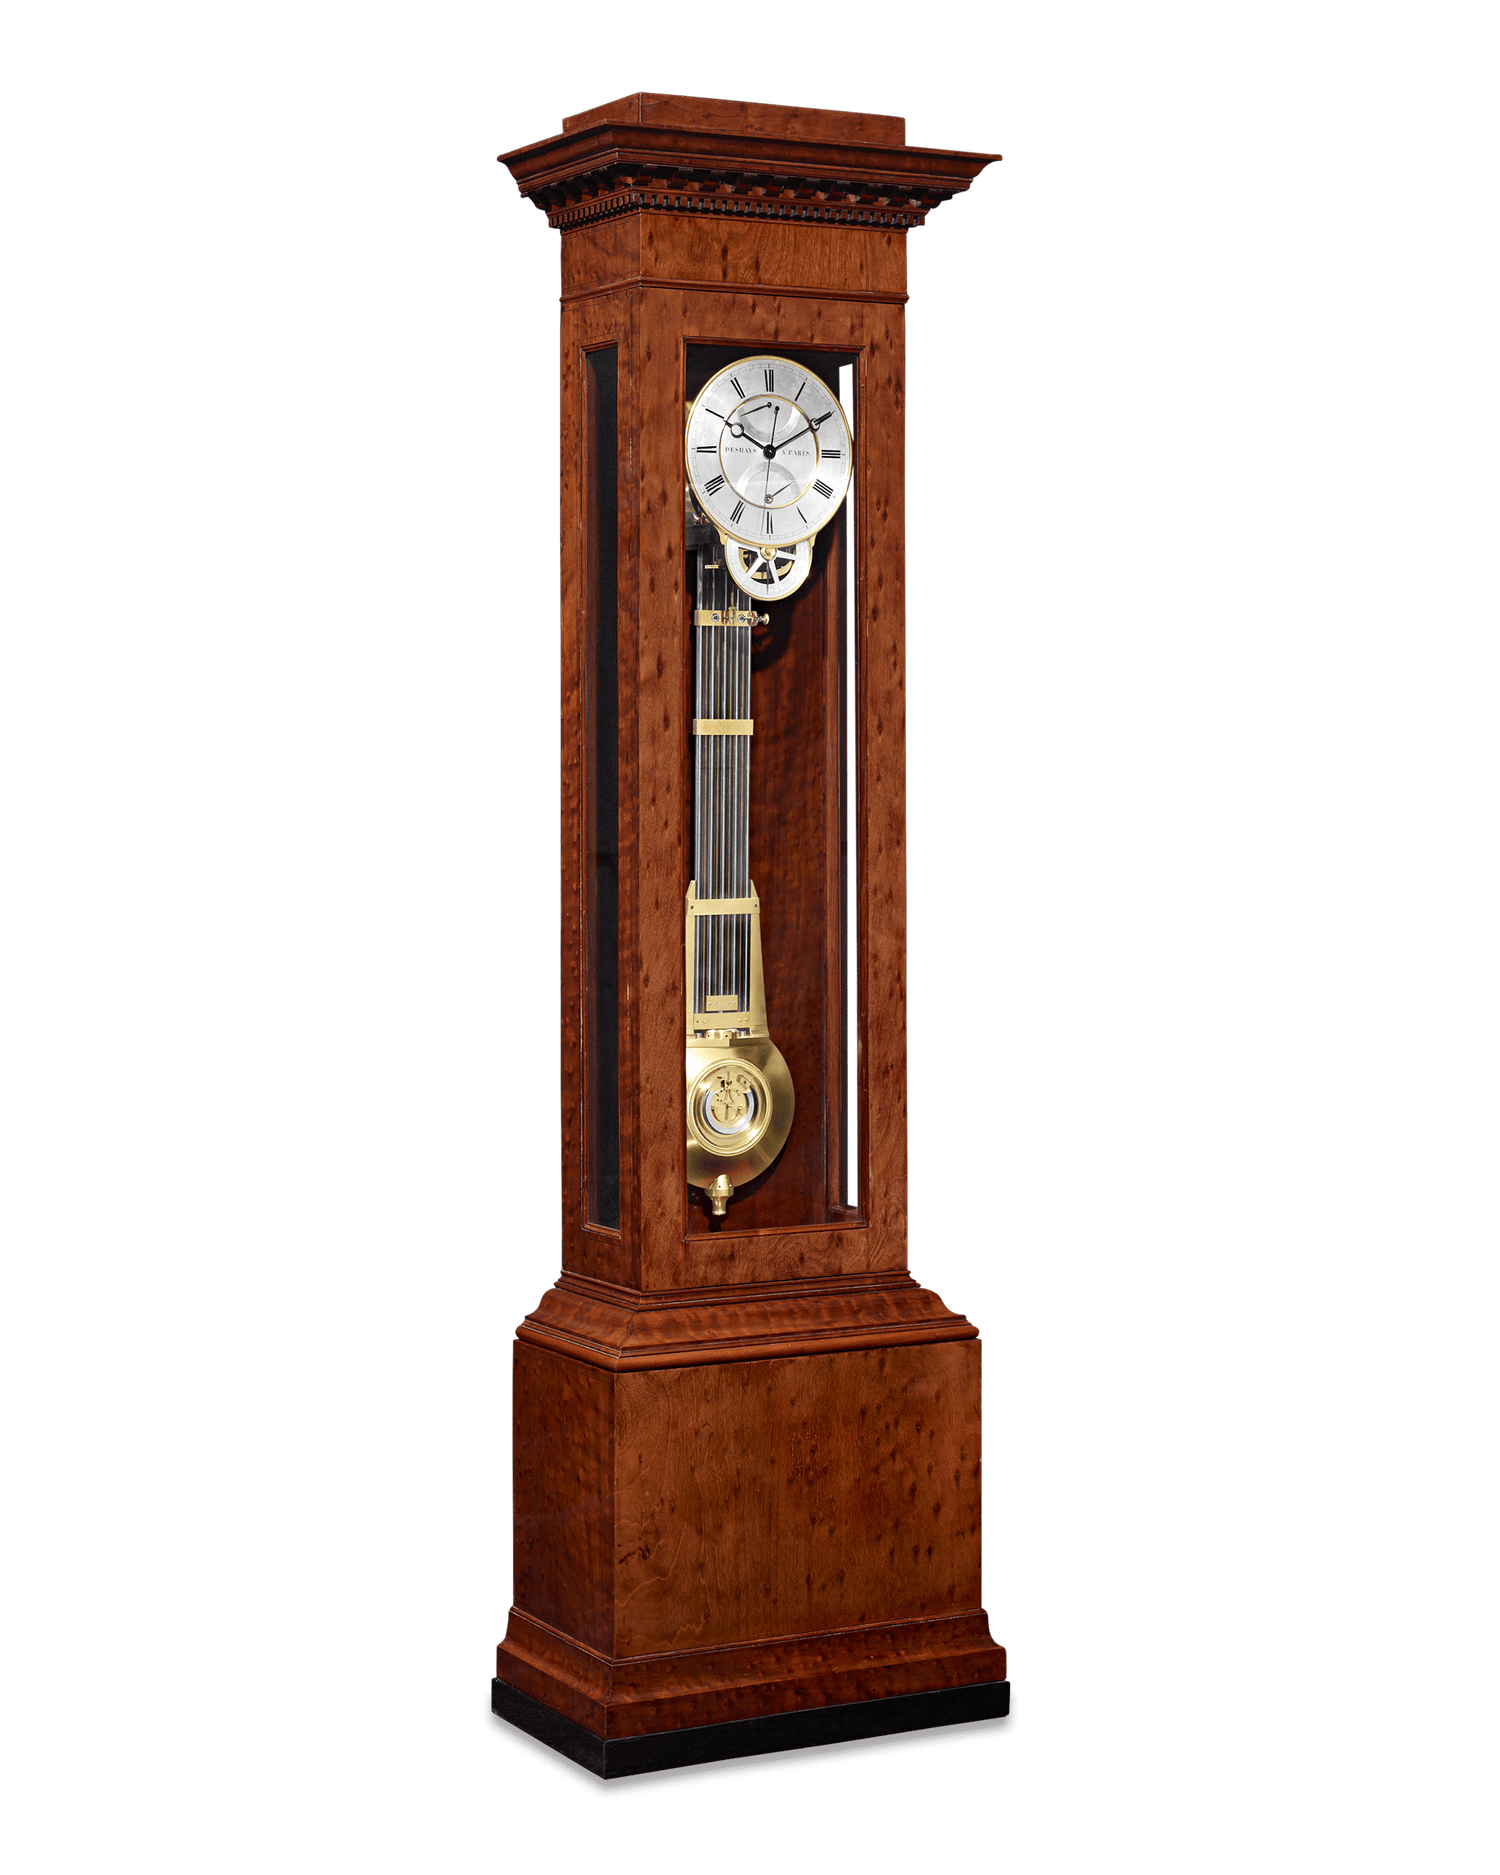 Month-Going Regulator Clock by Deshays à Paris